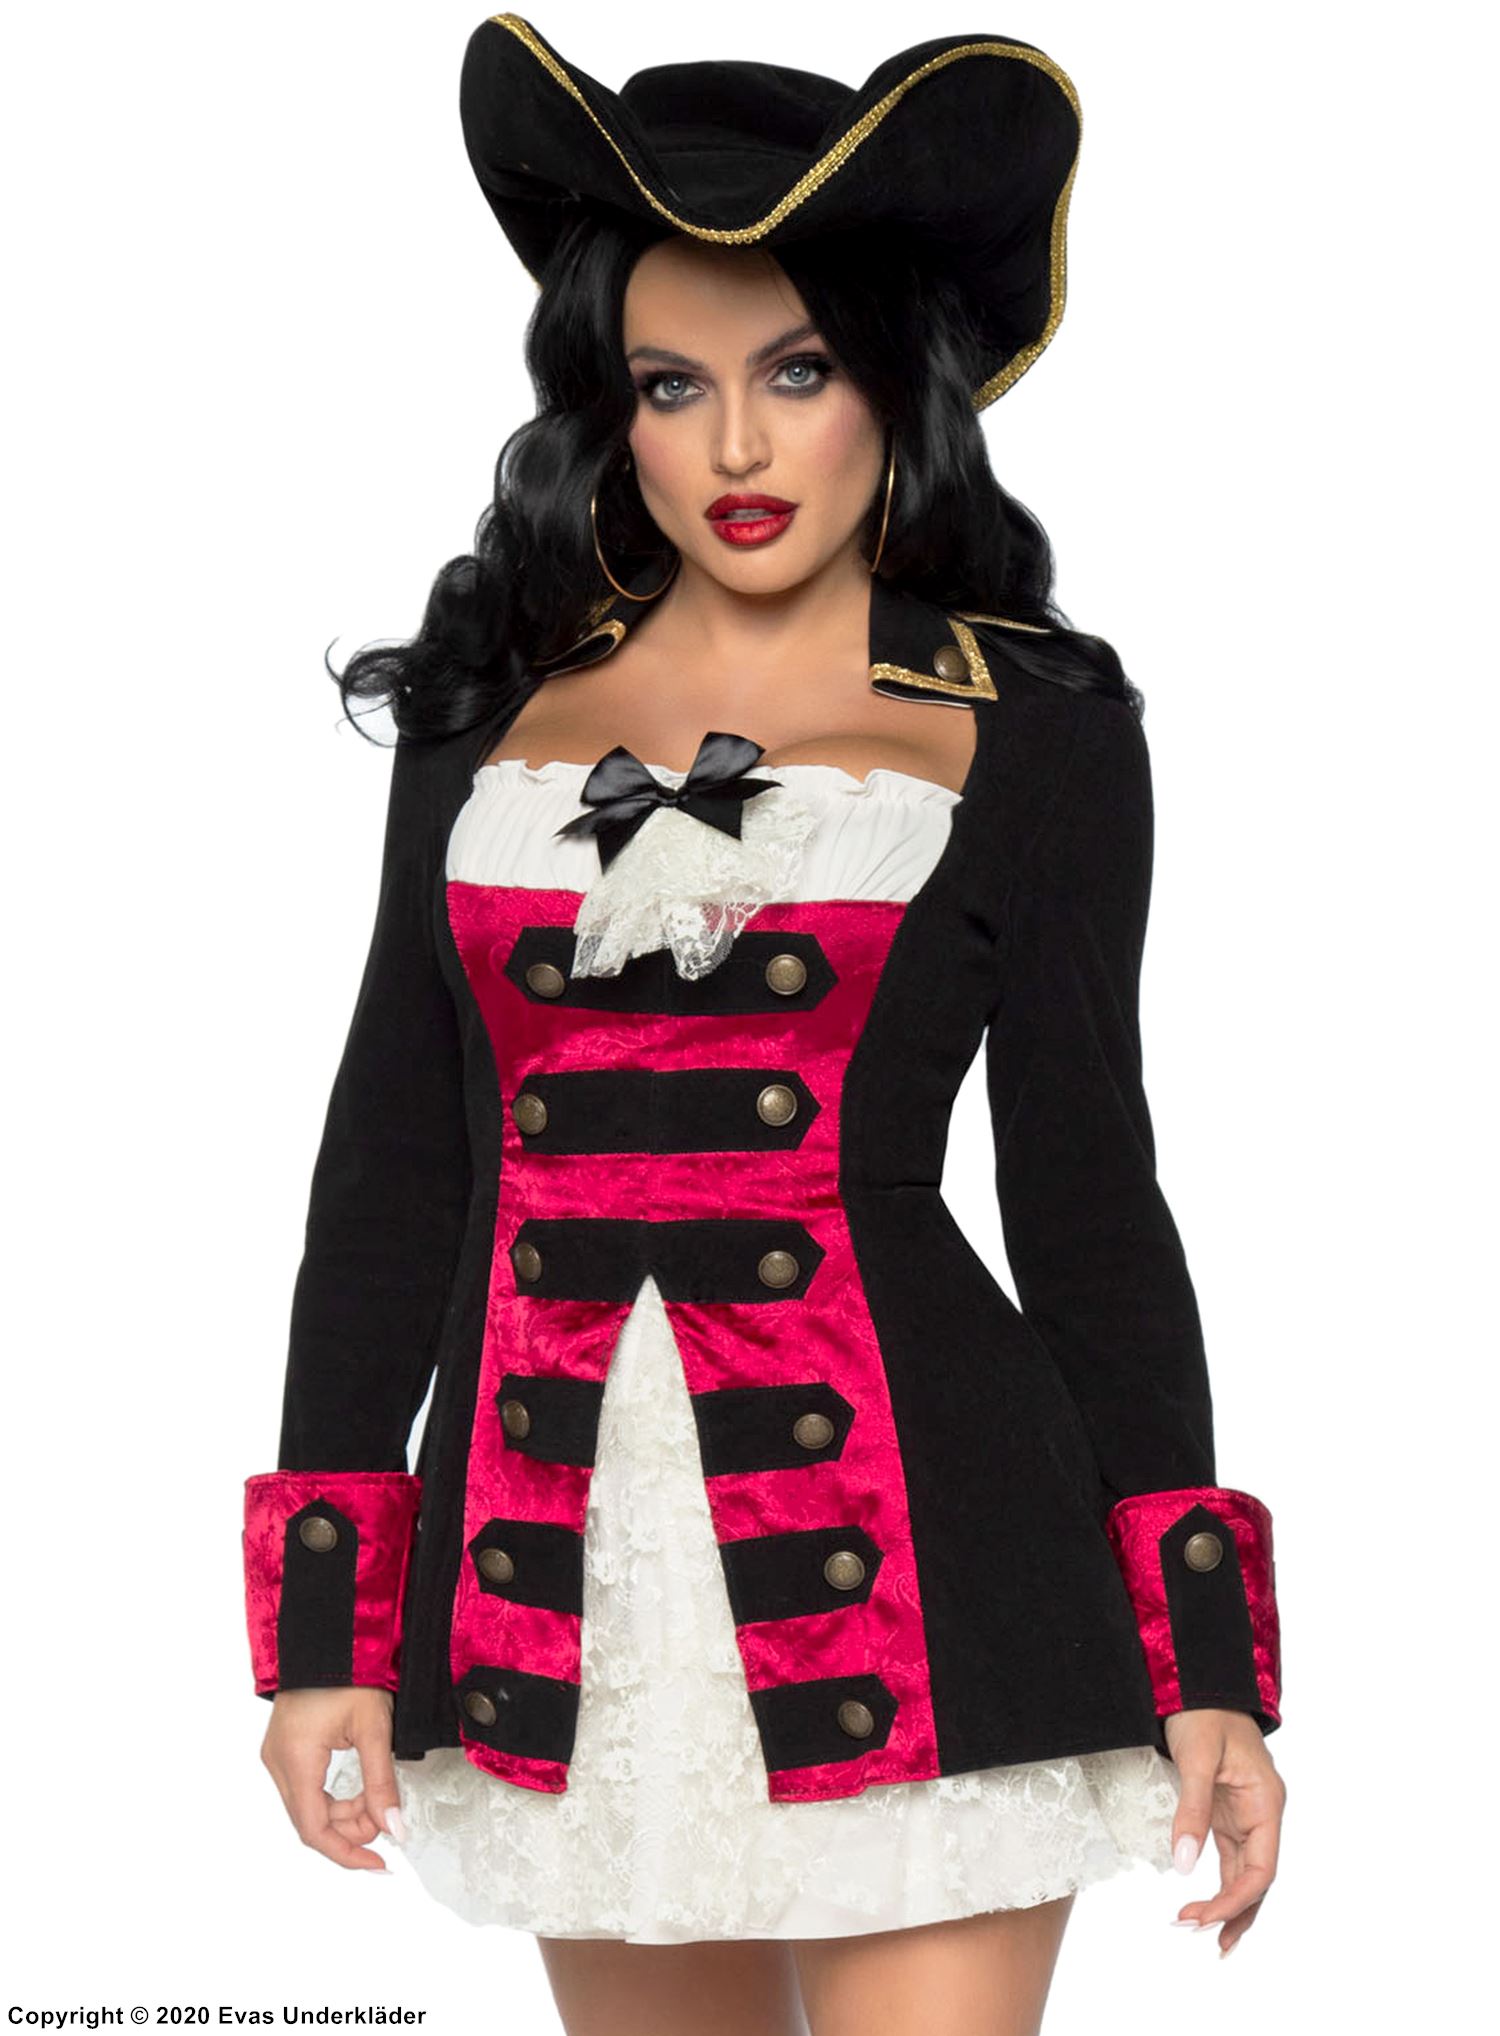 Female pirate captain, costume dress, lace, buttons, velvet